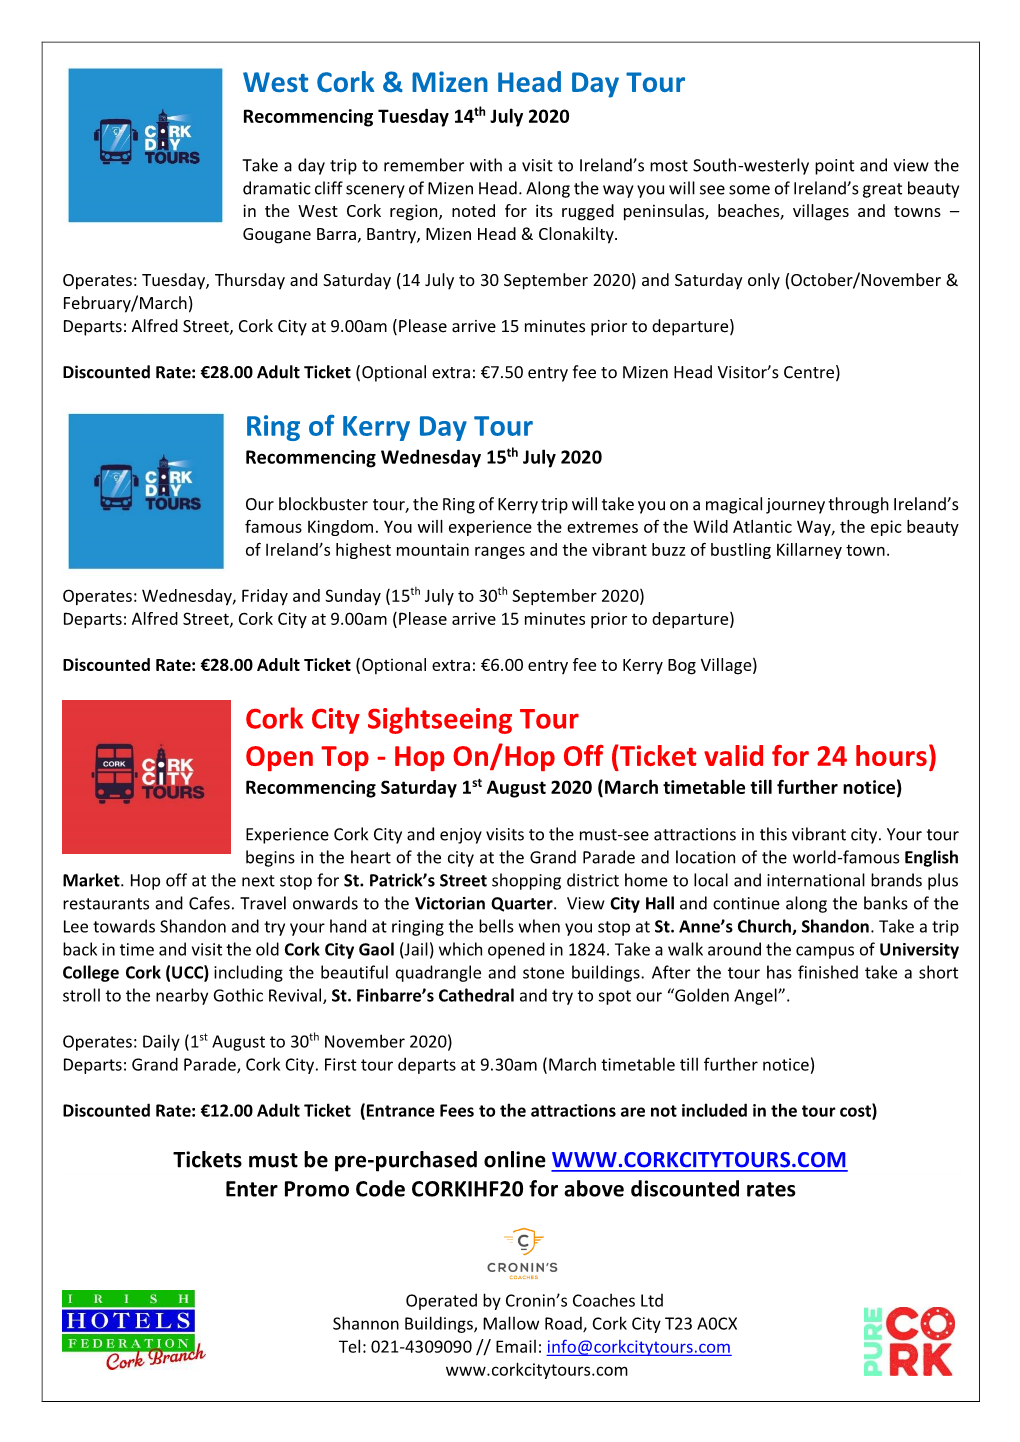 West Cork & Mizen Head Day Tour Ring of Kerry